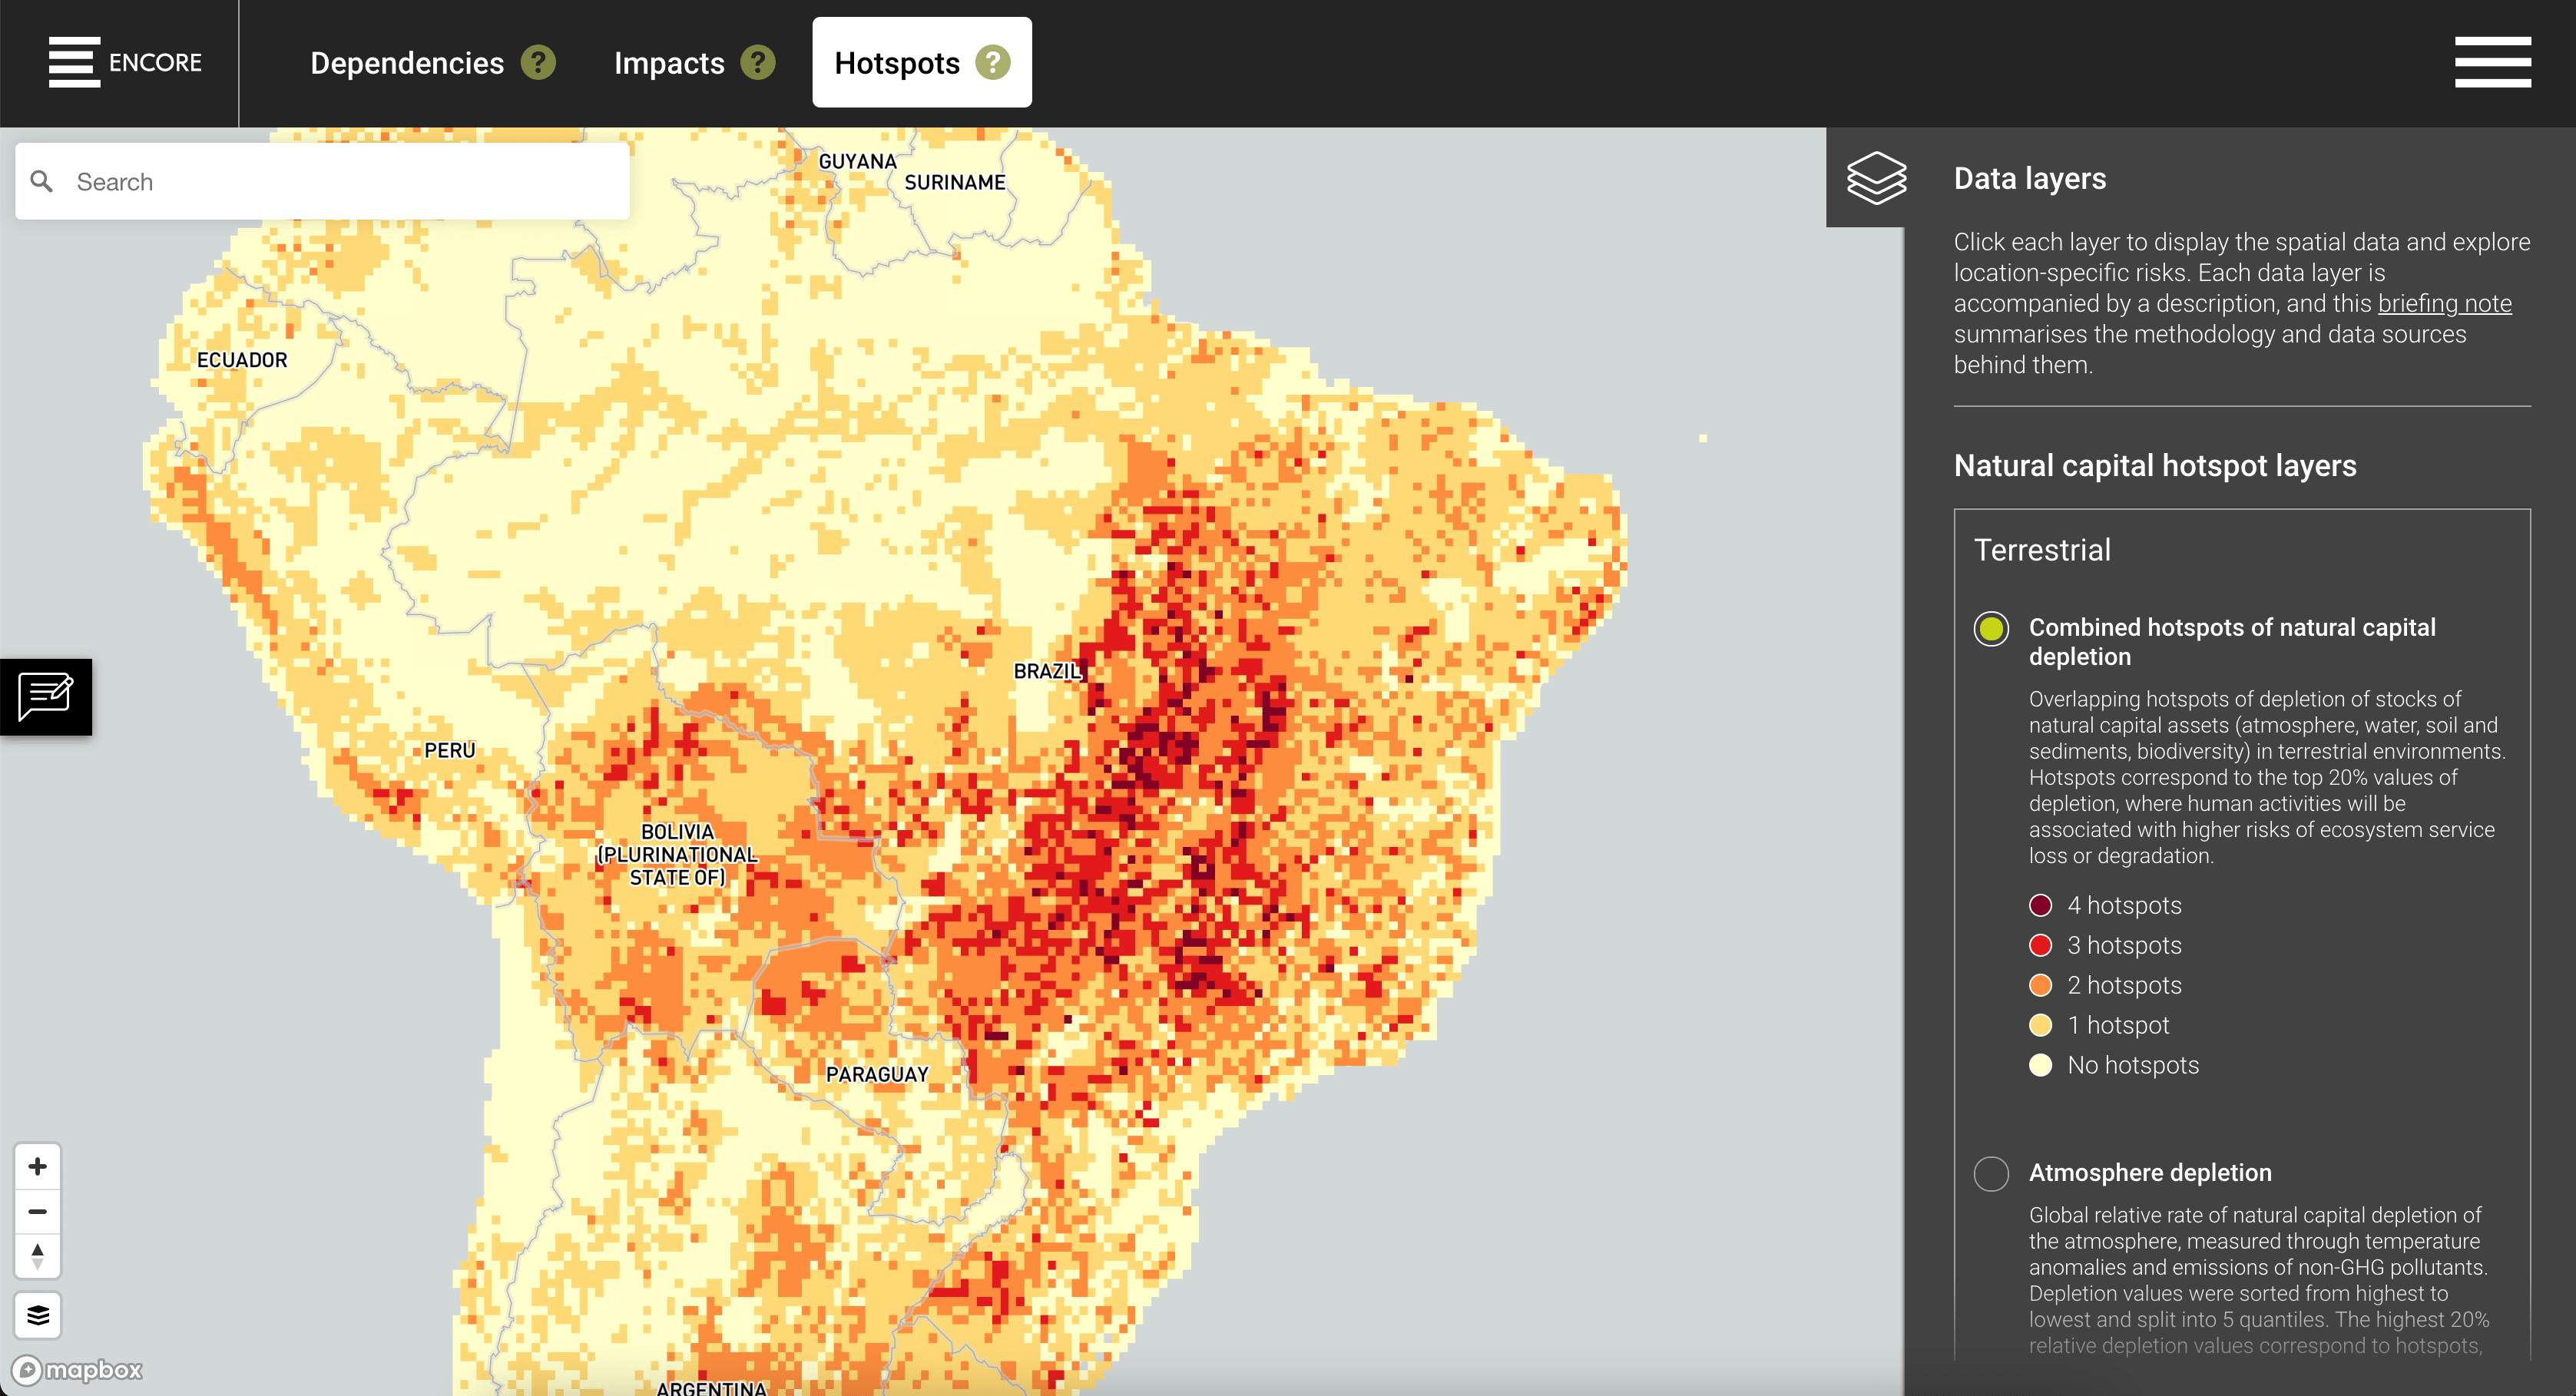 Explore datos espaciales sobre el capital natural con el mapa